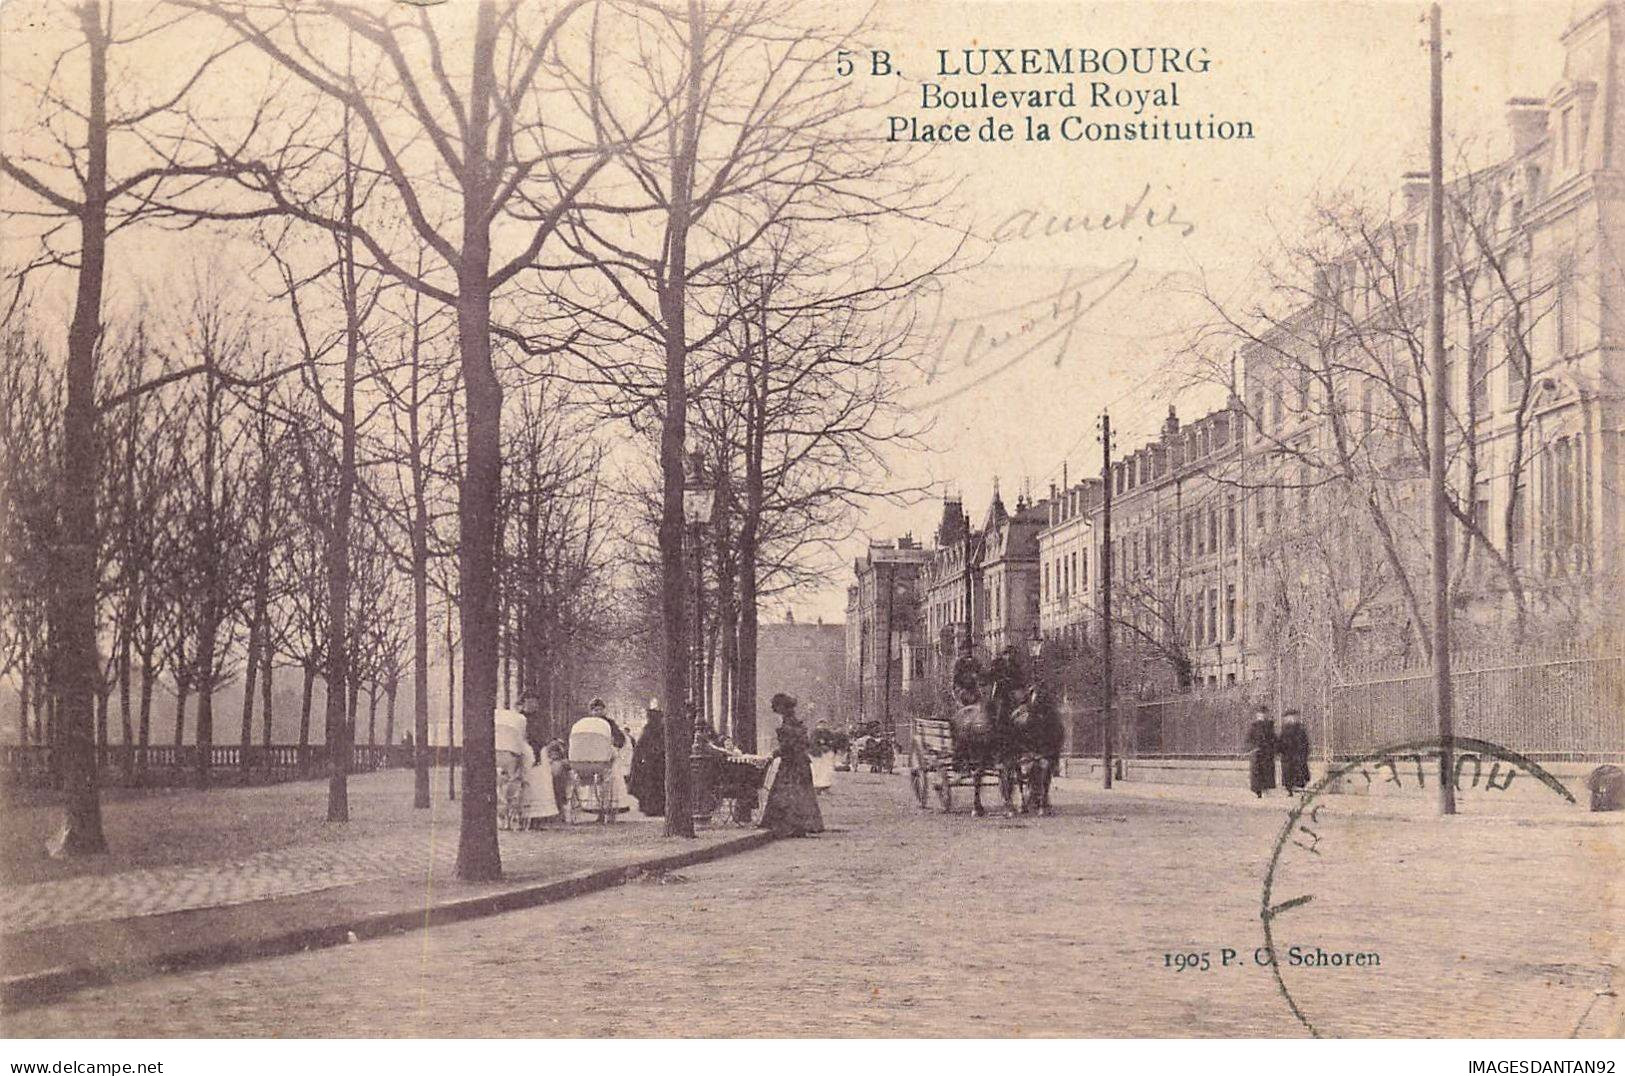 LUXEMBOURG #FG54497 LUXEMBURG BOULEVARD ROYAL PLACE DE LA CONSTITUTION - Luxemburg - Town